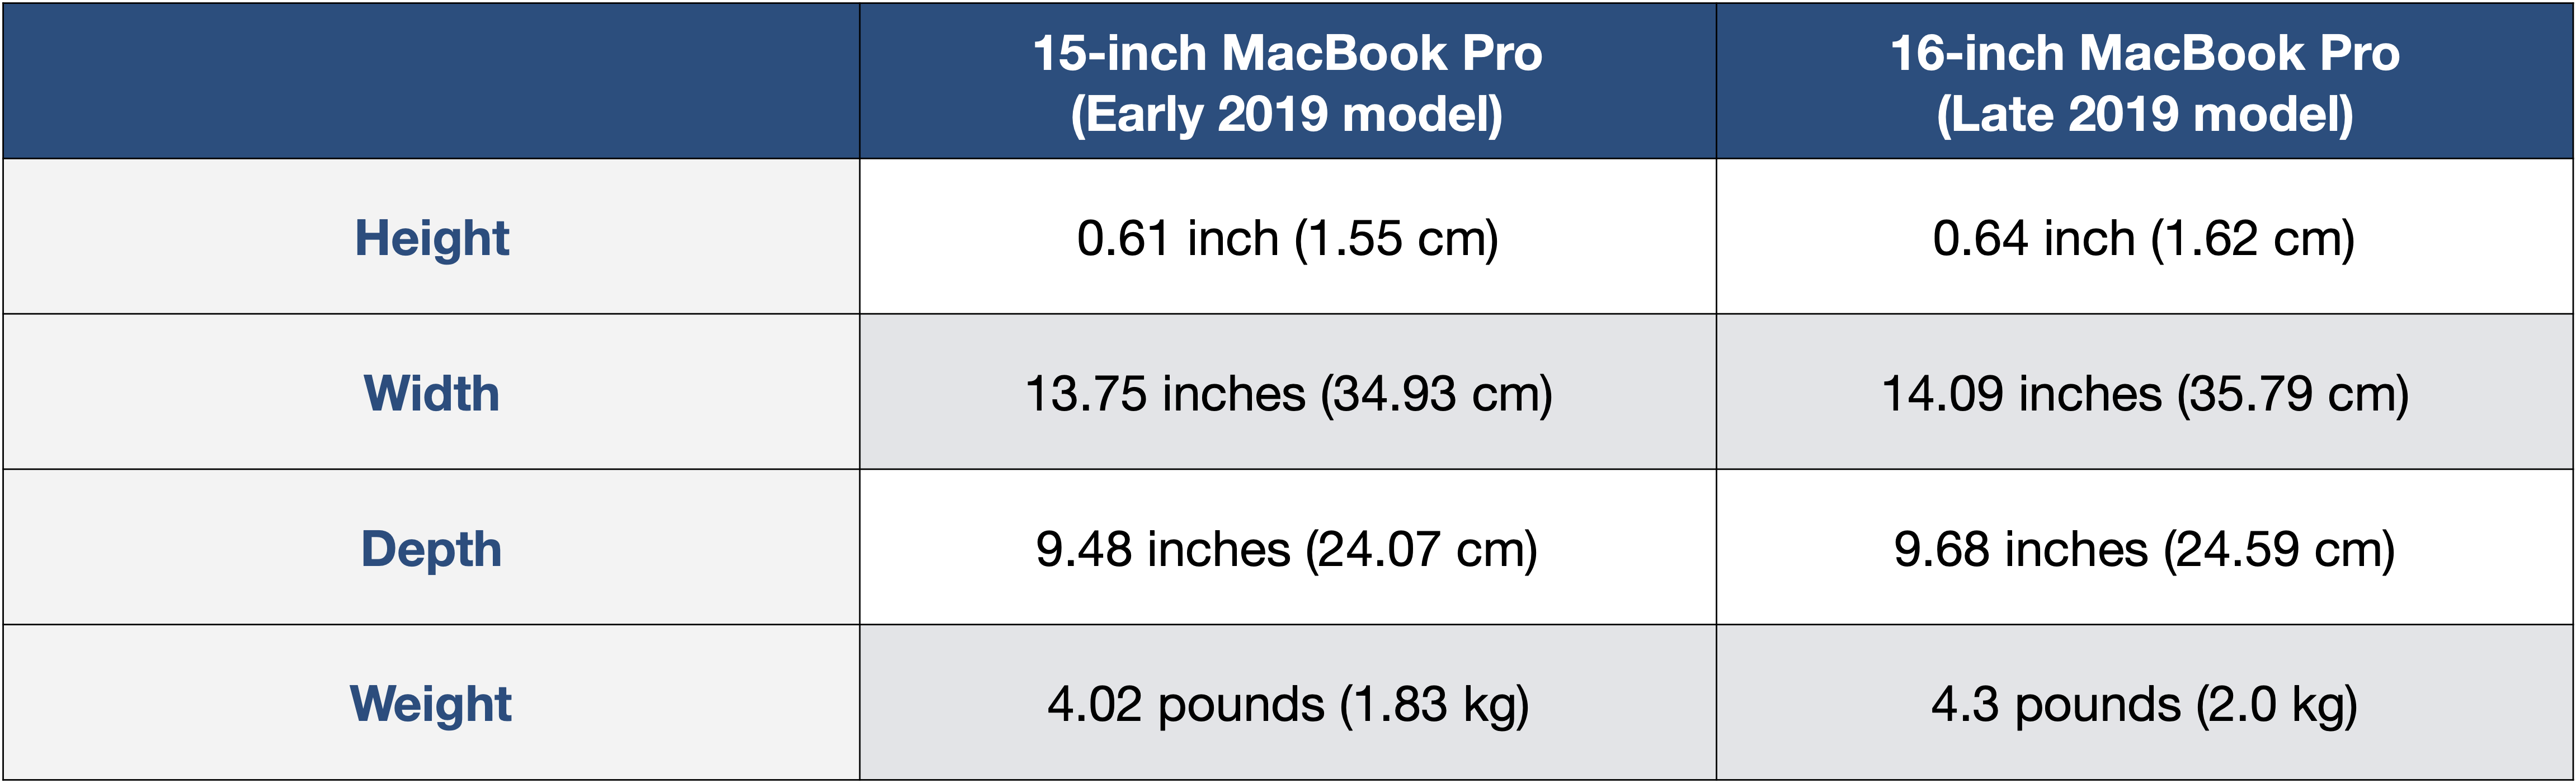 macbook pro dimensions .95 .71